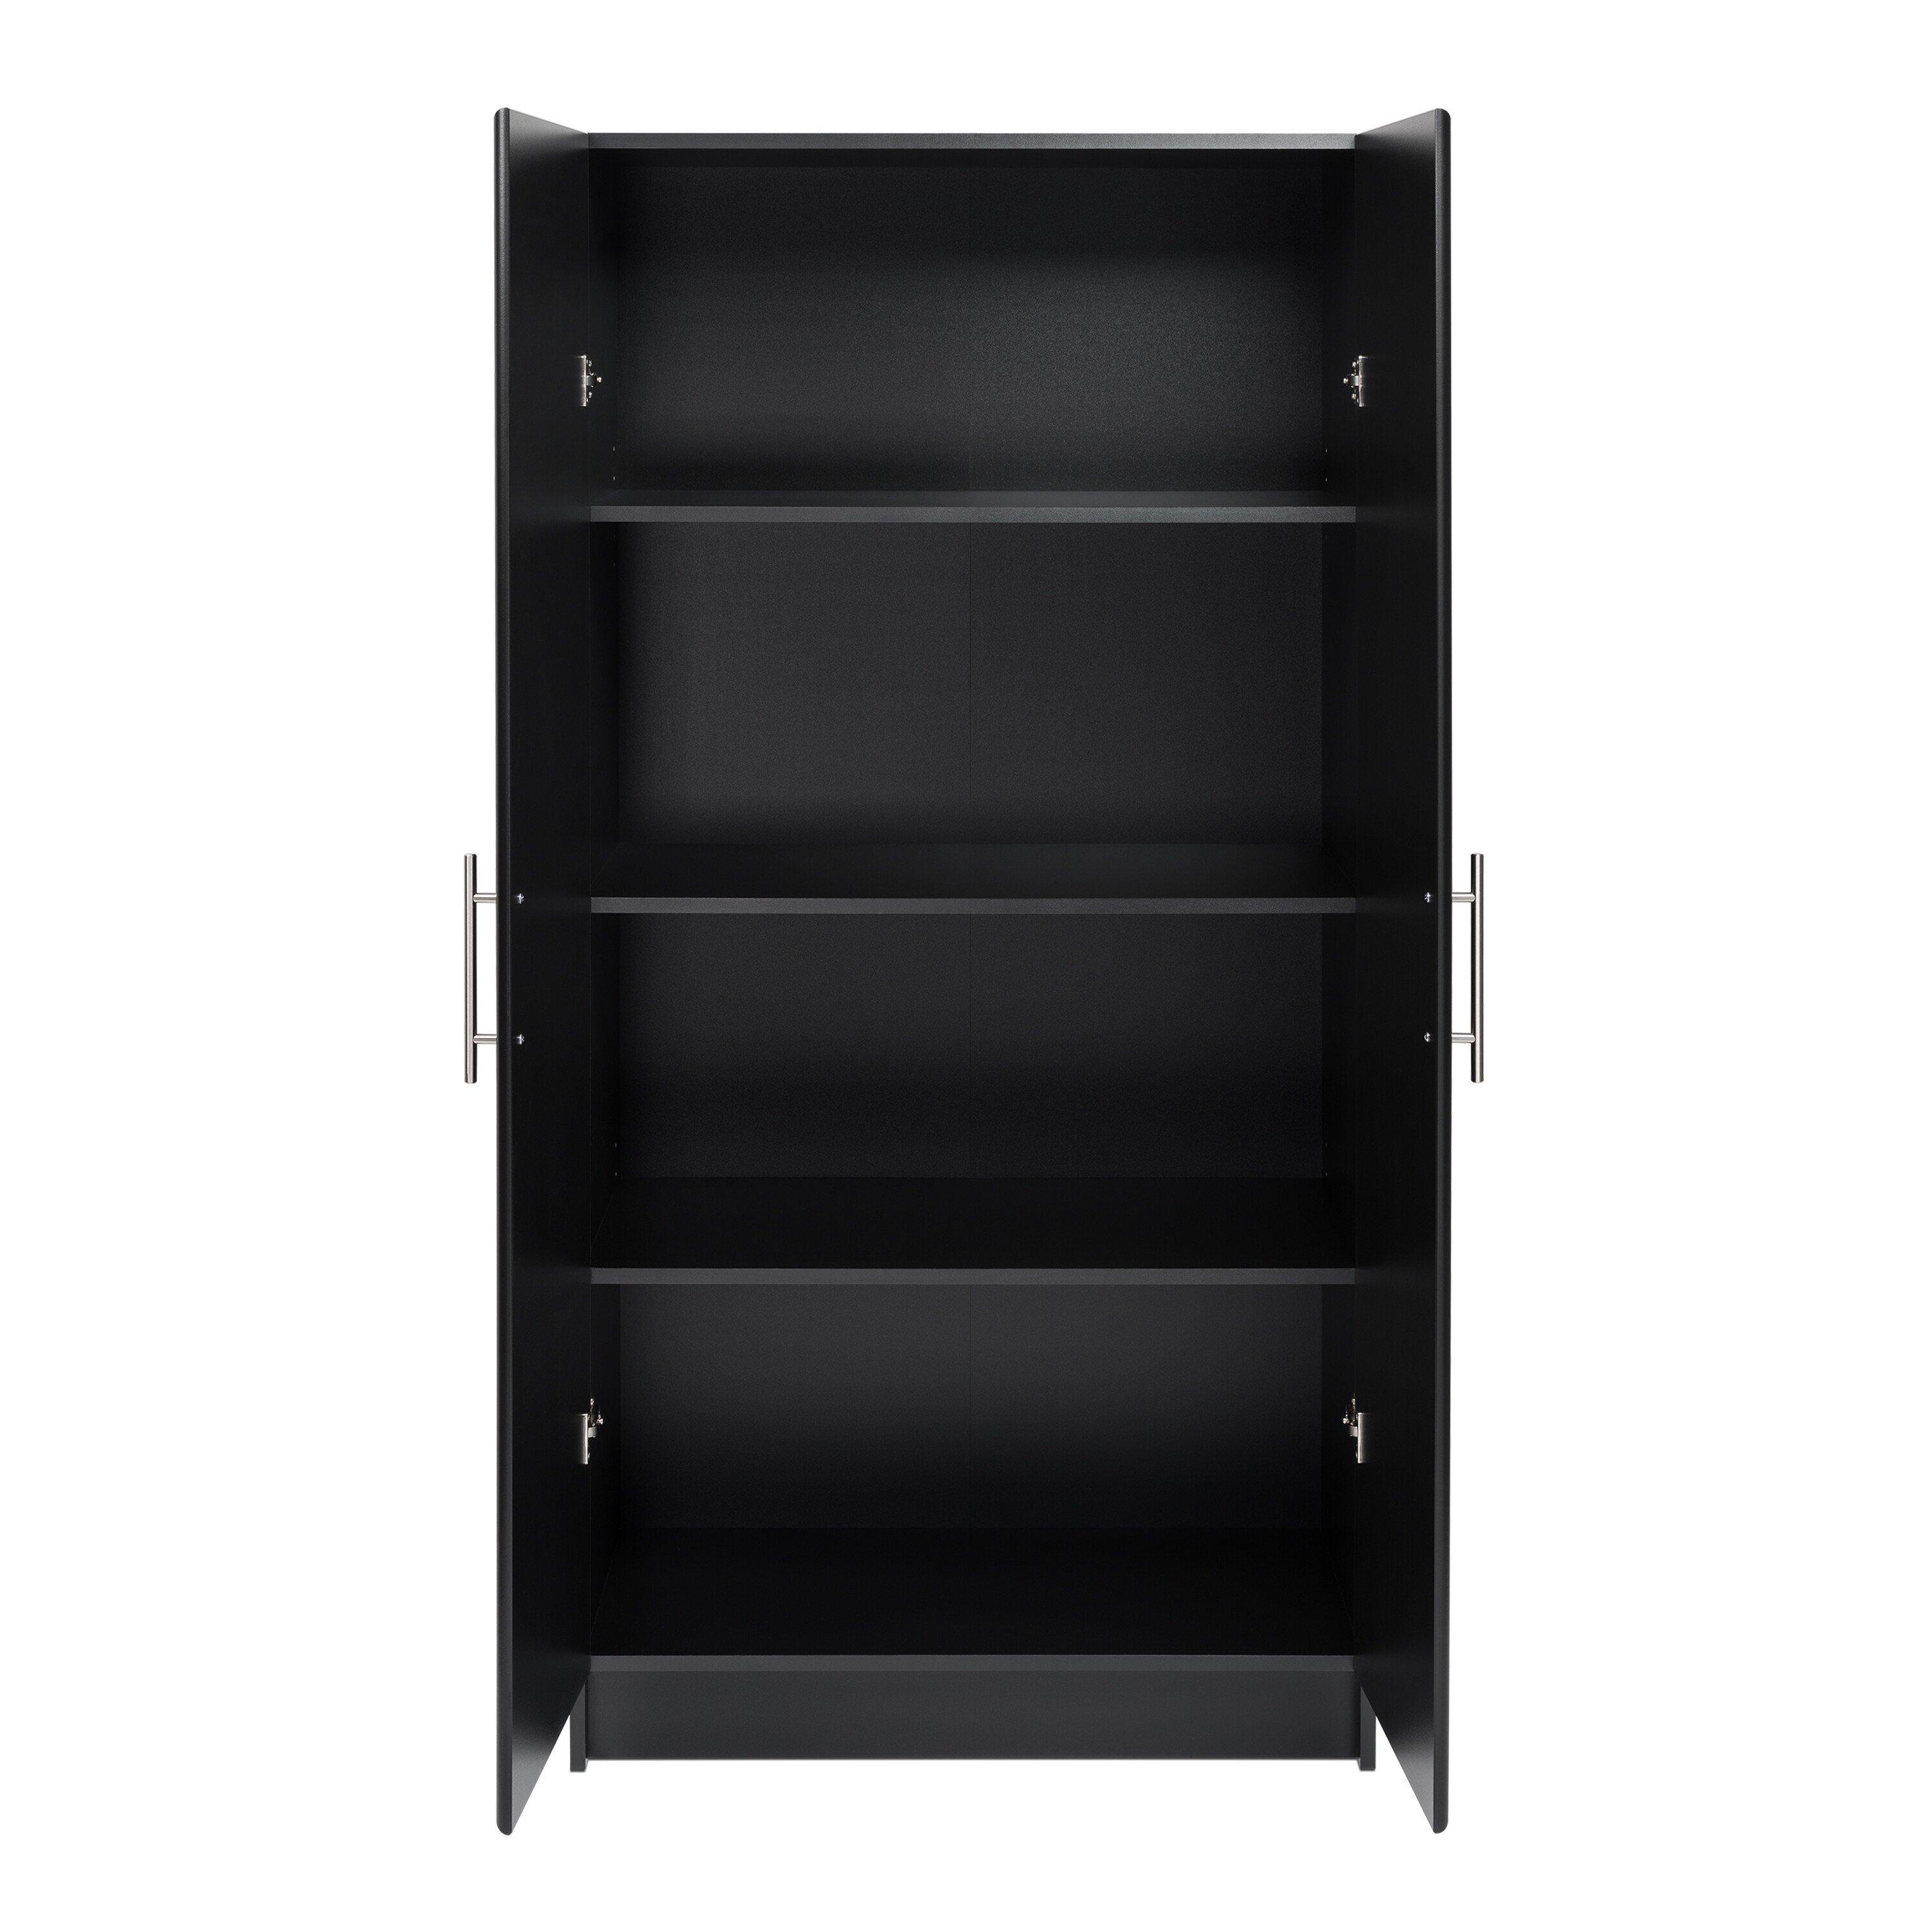 Lepeuxi Garden Storage Shed Storage Cabinet Storage Utility Cabinet with 4 Shelves Black 